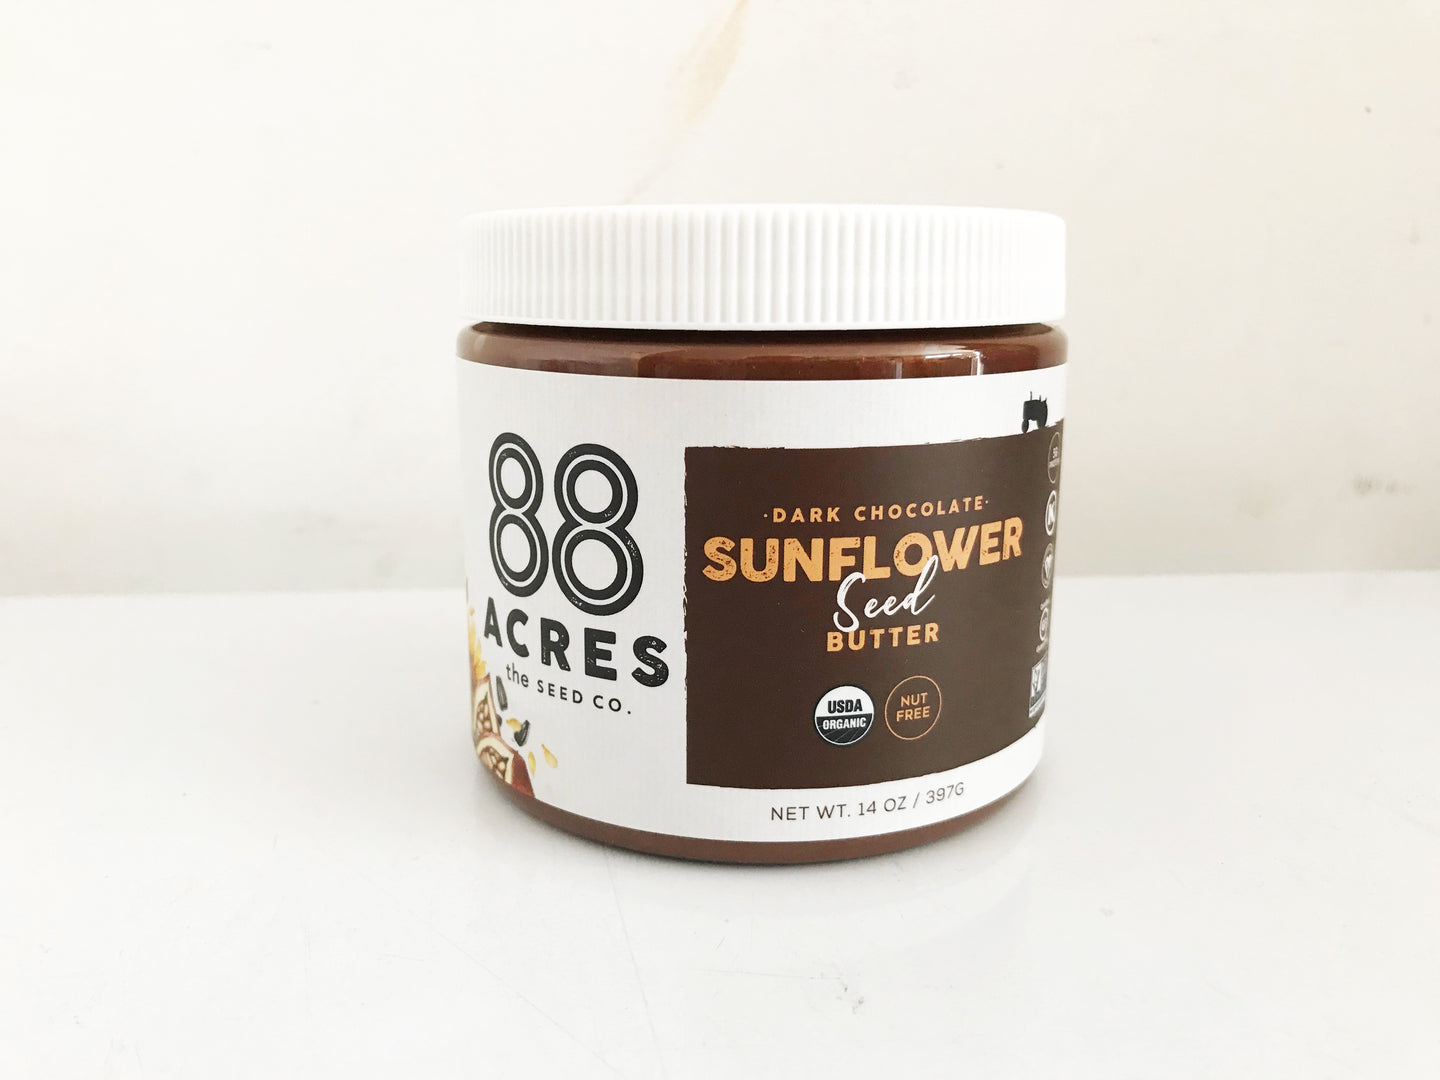 88 Acres Dark Chocolate Sunflower Seed Butter